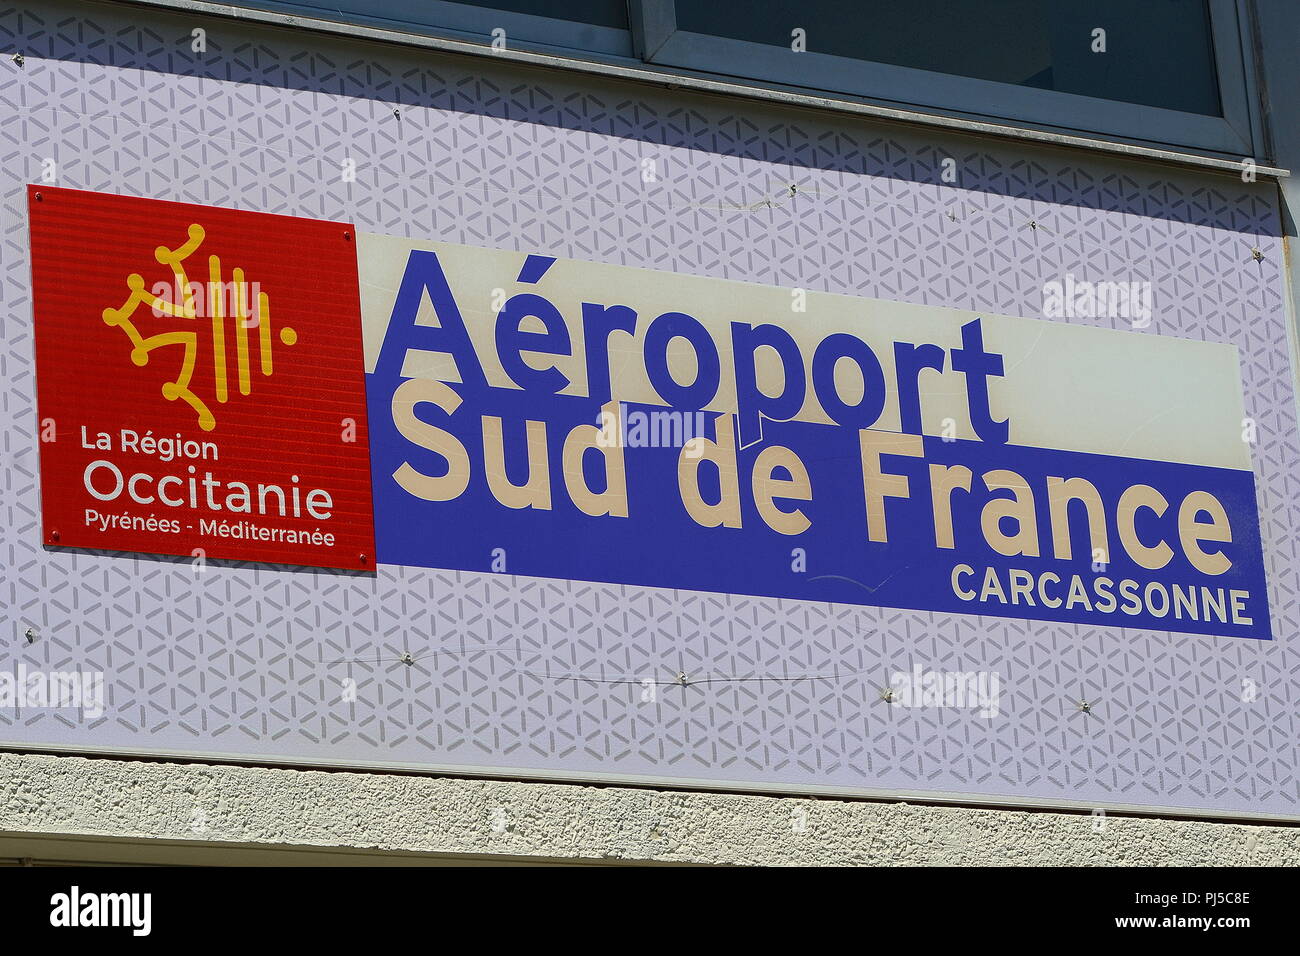 SIGN FOR AEROPORT SUD de FRANCE CARCASSONNE. Stock Photo